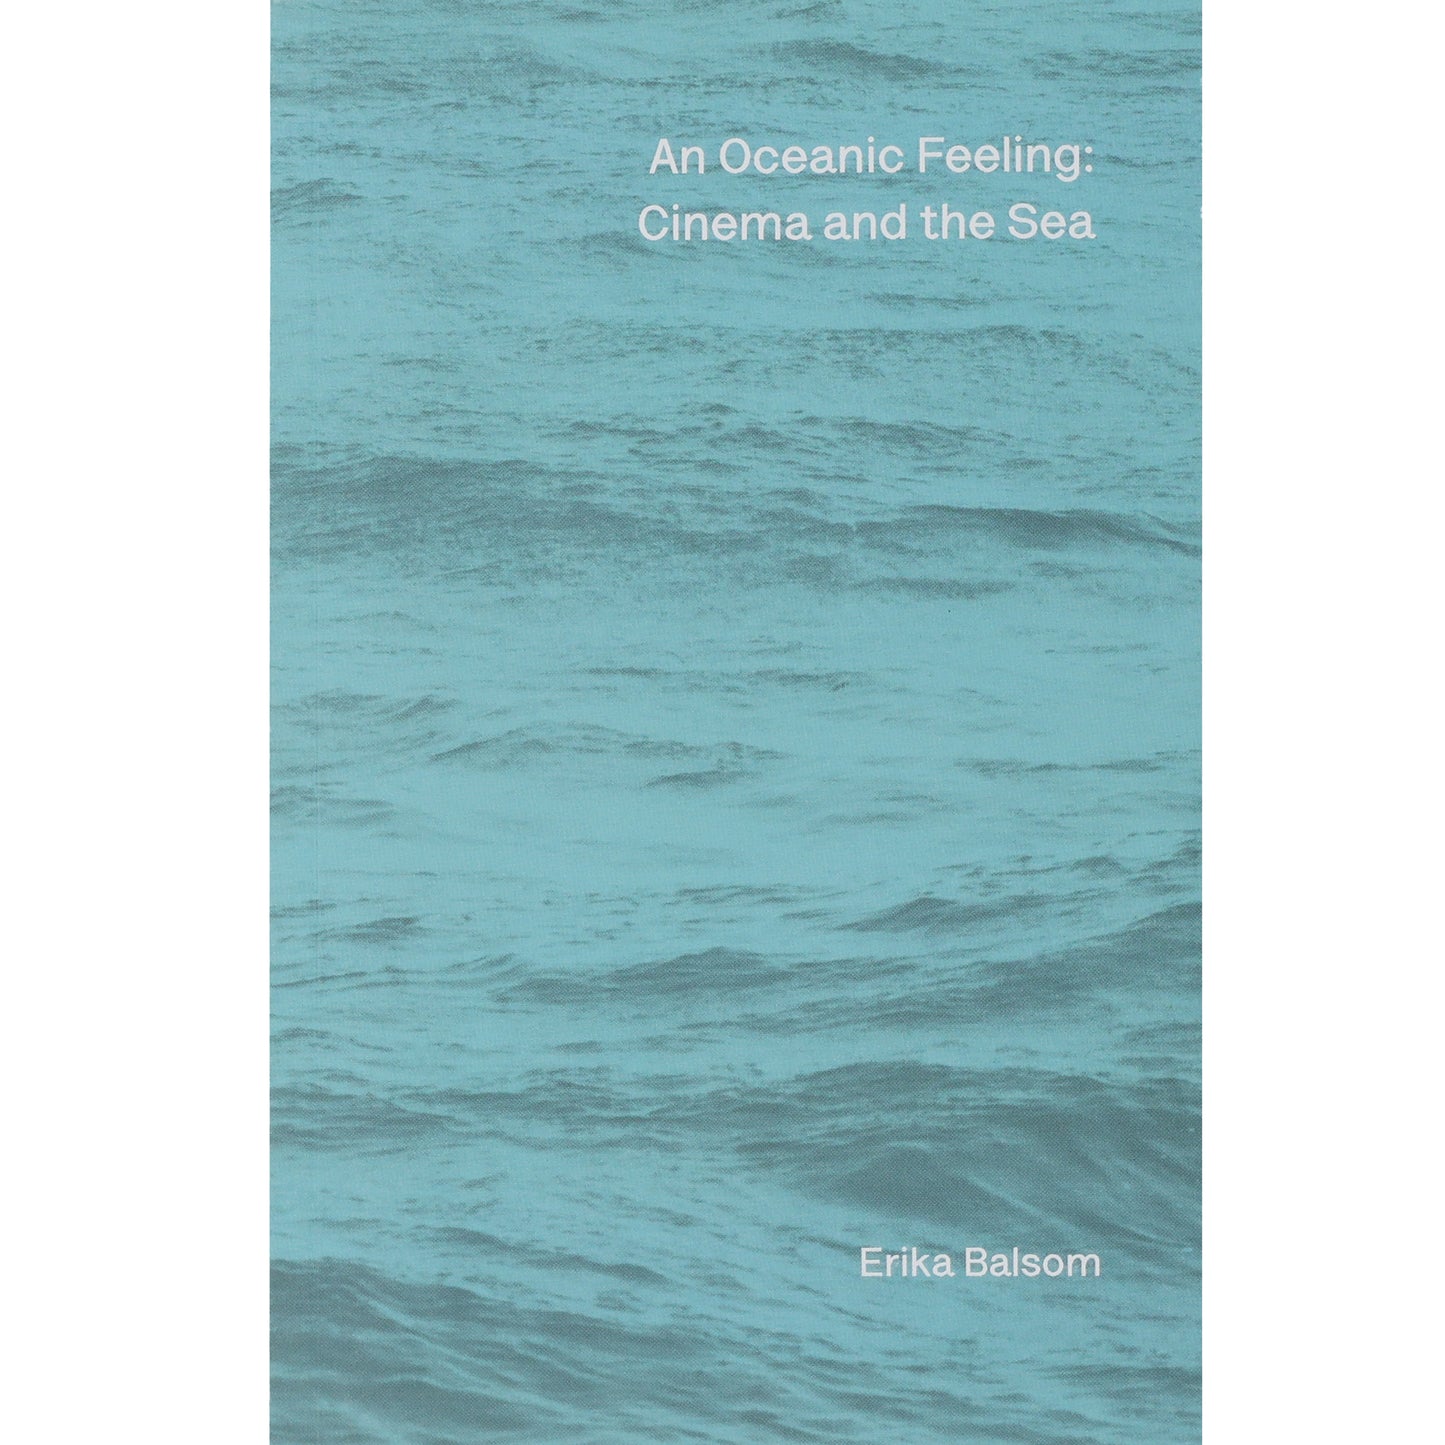 An Oceanic Feeling: Cinema and the Sea